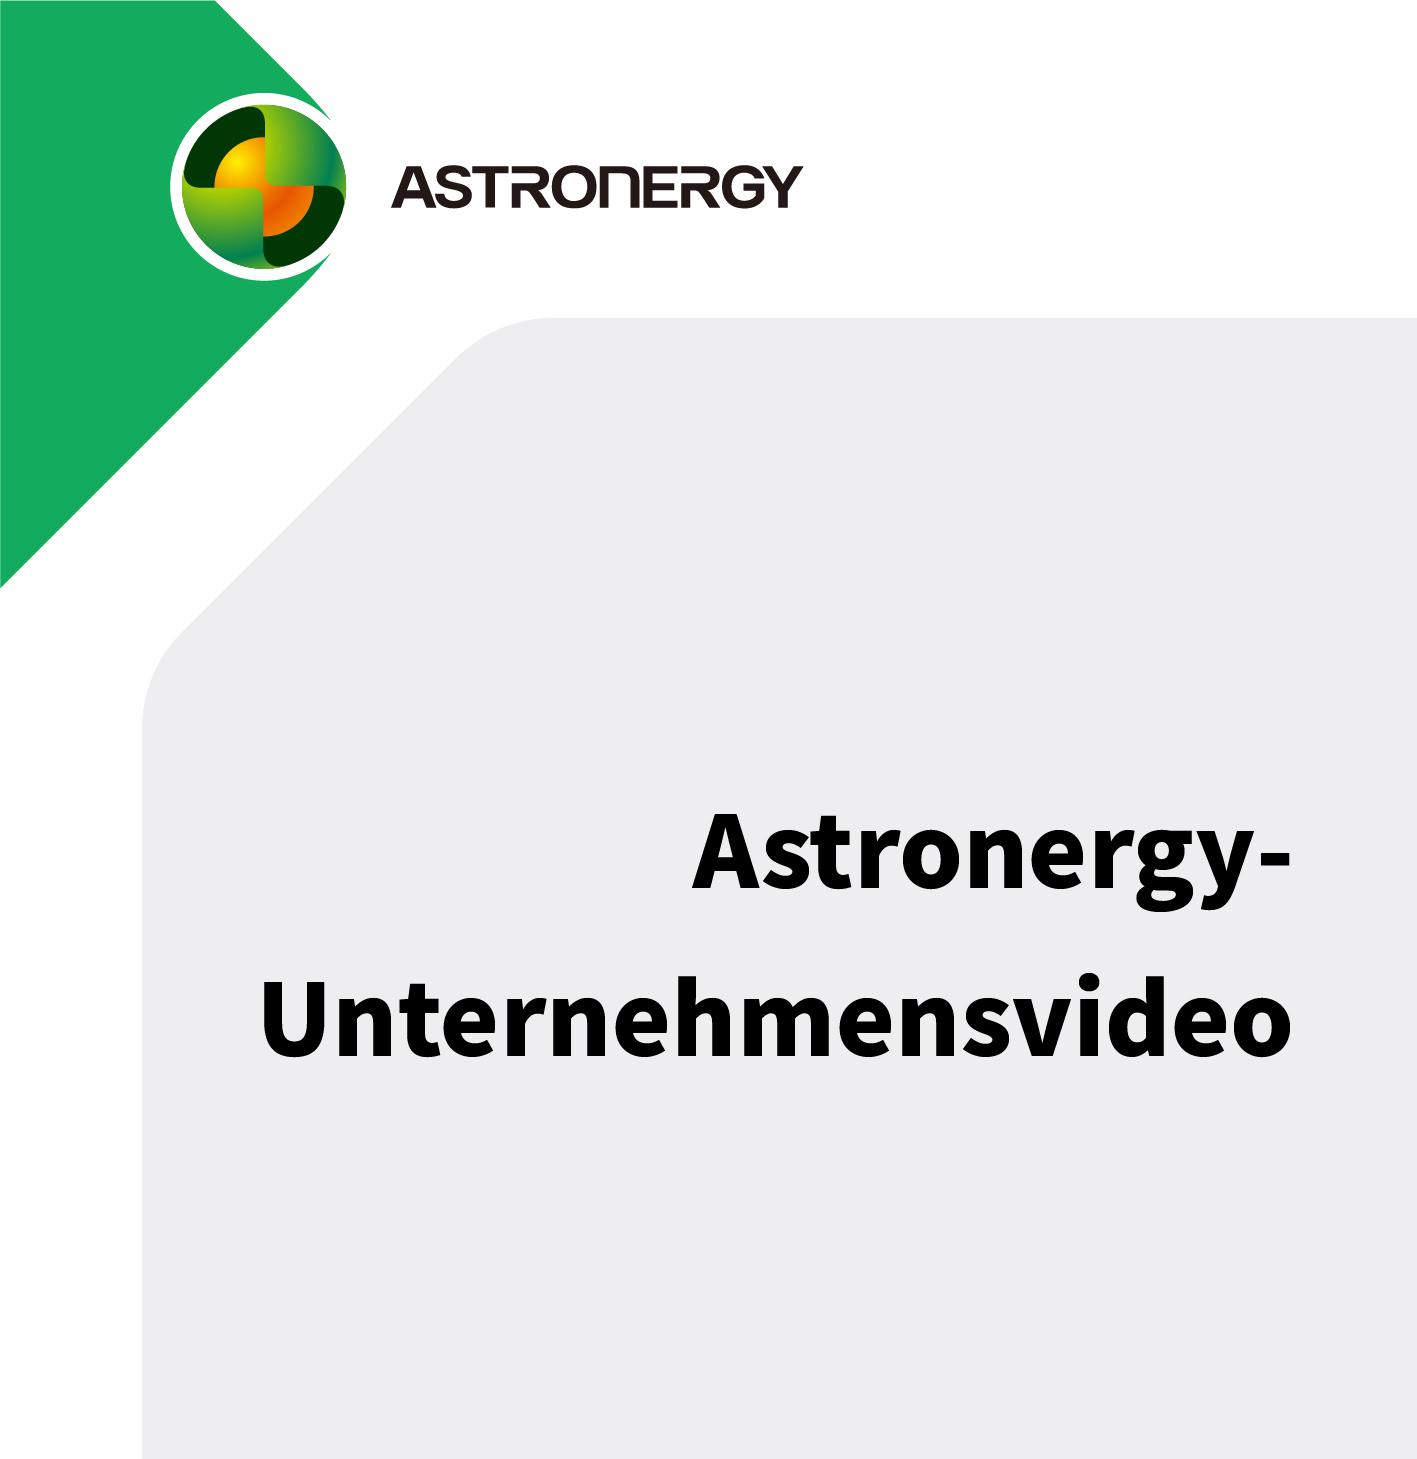 Astronergy-Unternehmensvideo